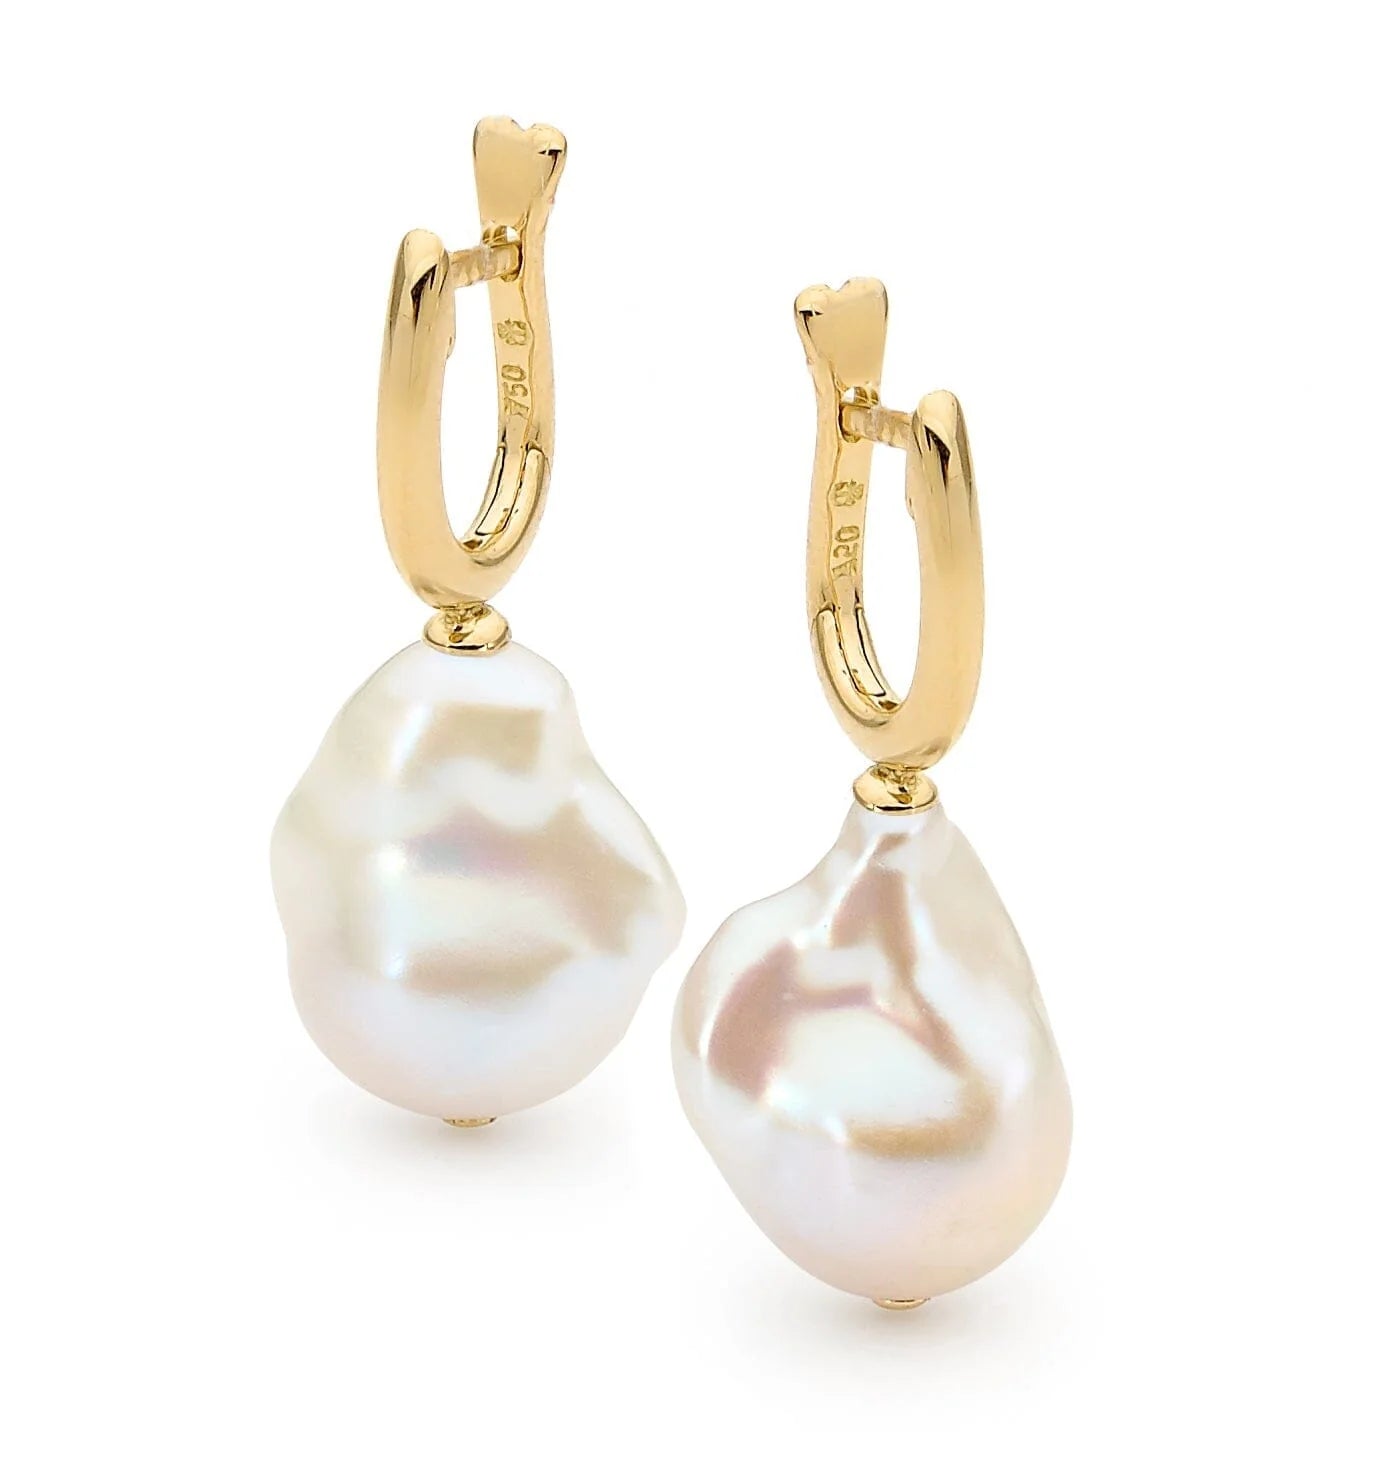 Duo Jewellery Earrings Solid Gold La Pepite d'Or Huggies